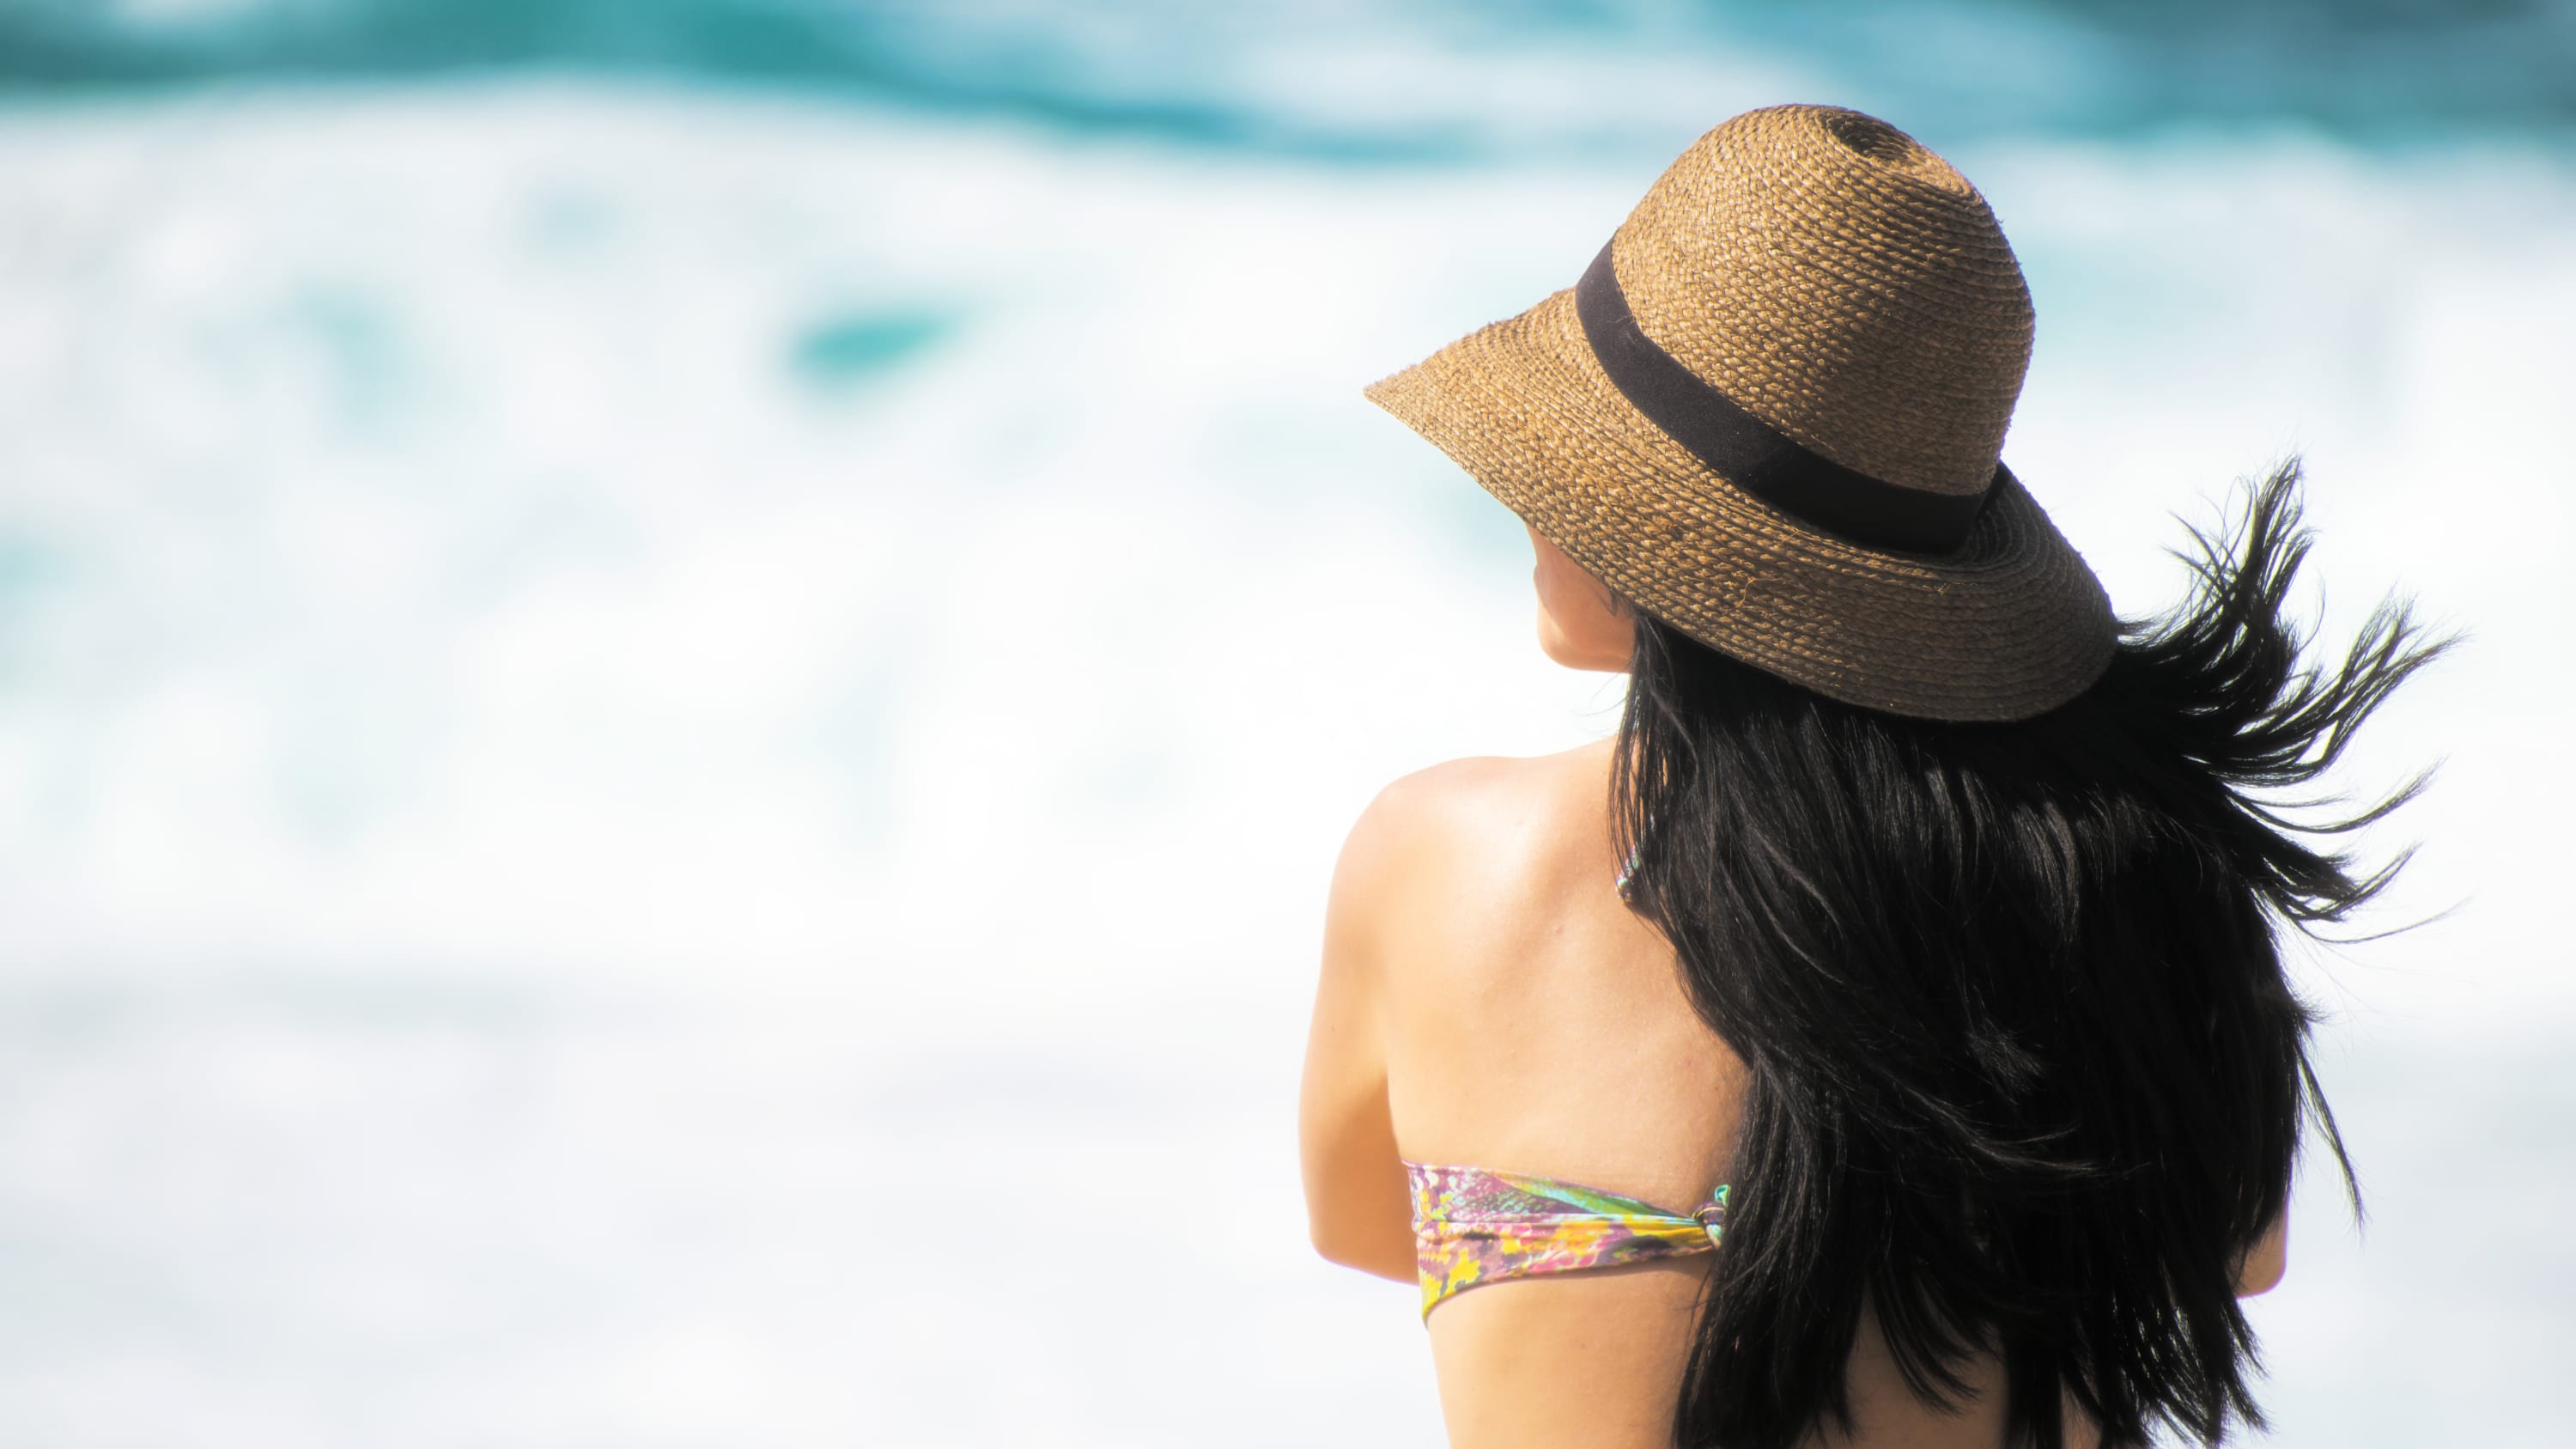 Woman on beach with long dark hair wearing hat.